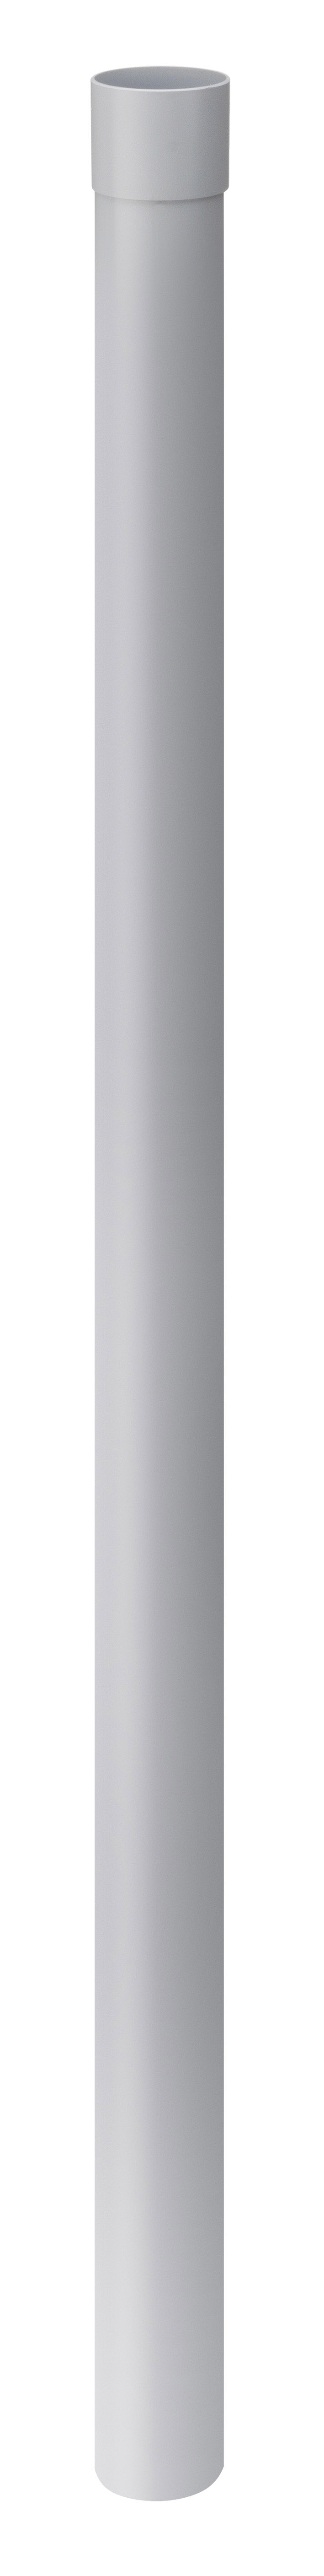 Inefa-Fallrohr NW 100 - 2 m grau 82515 incl. Muffe